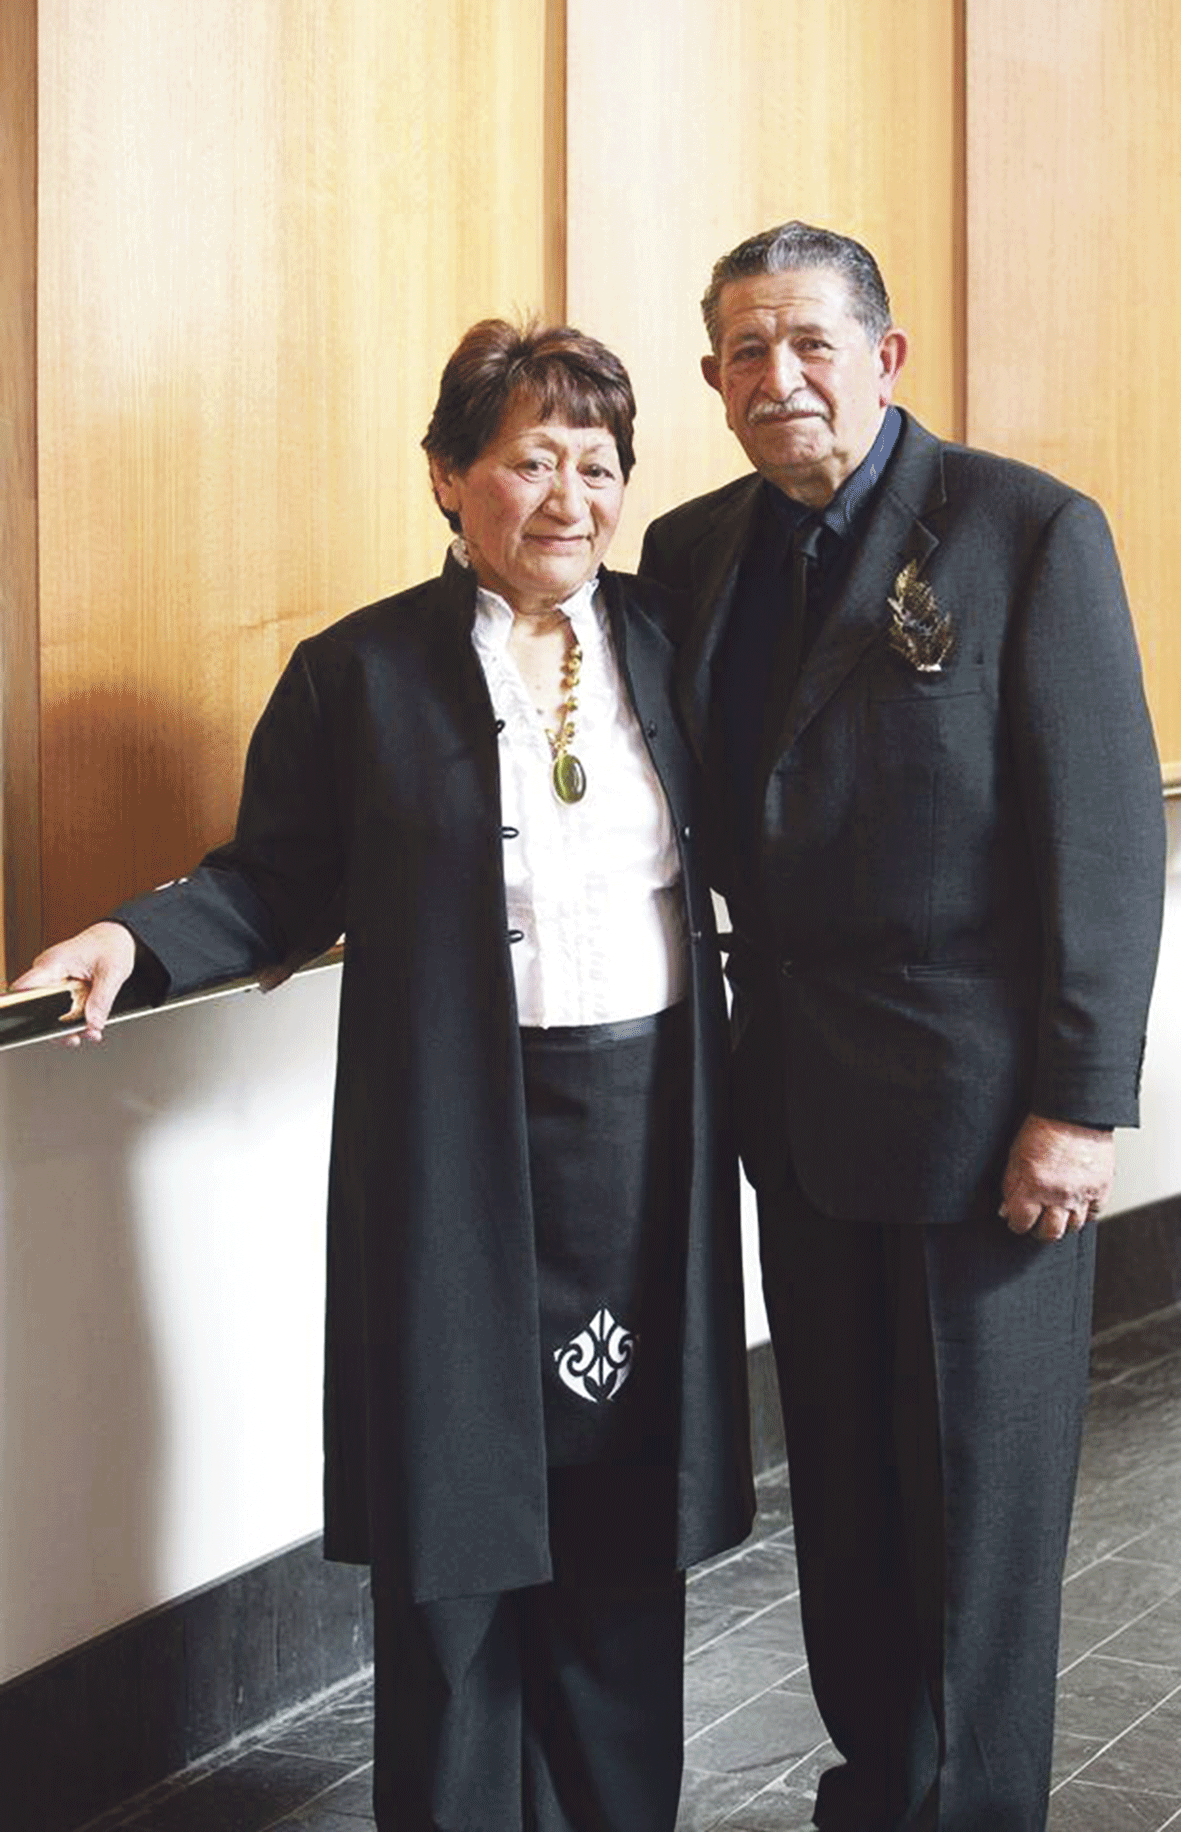 Papal honour for dedicated Catholic kaumatua Archdiocese of Wellington